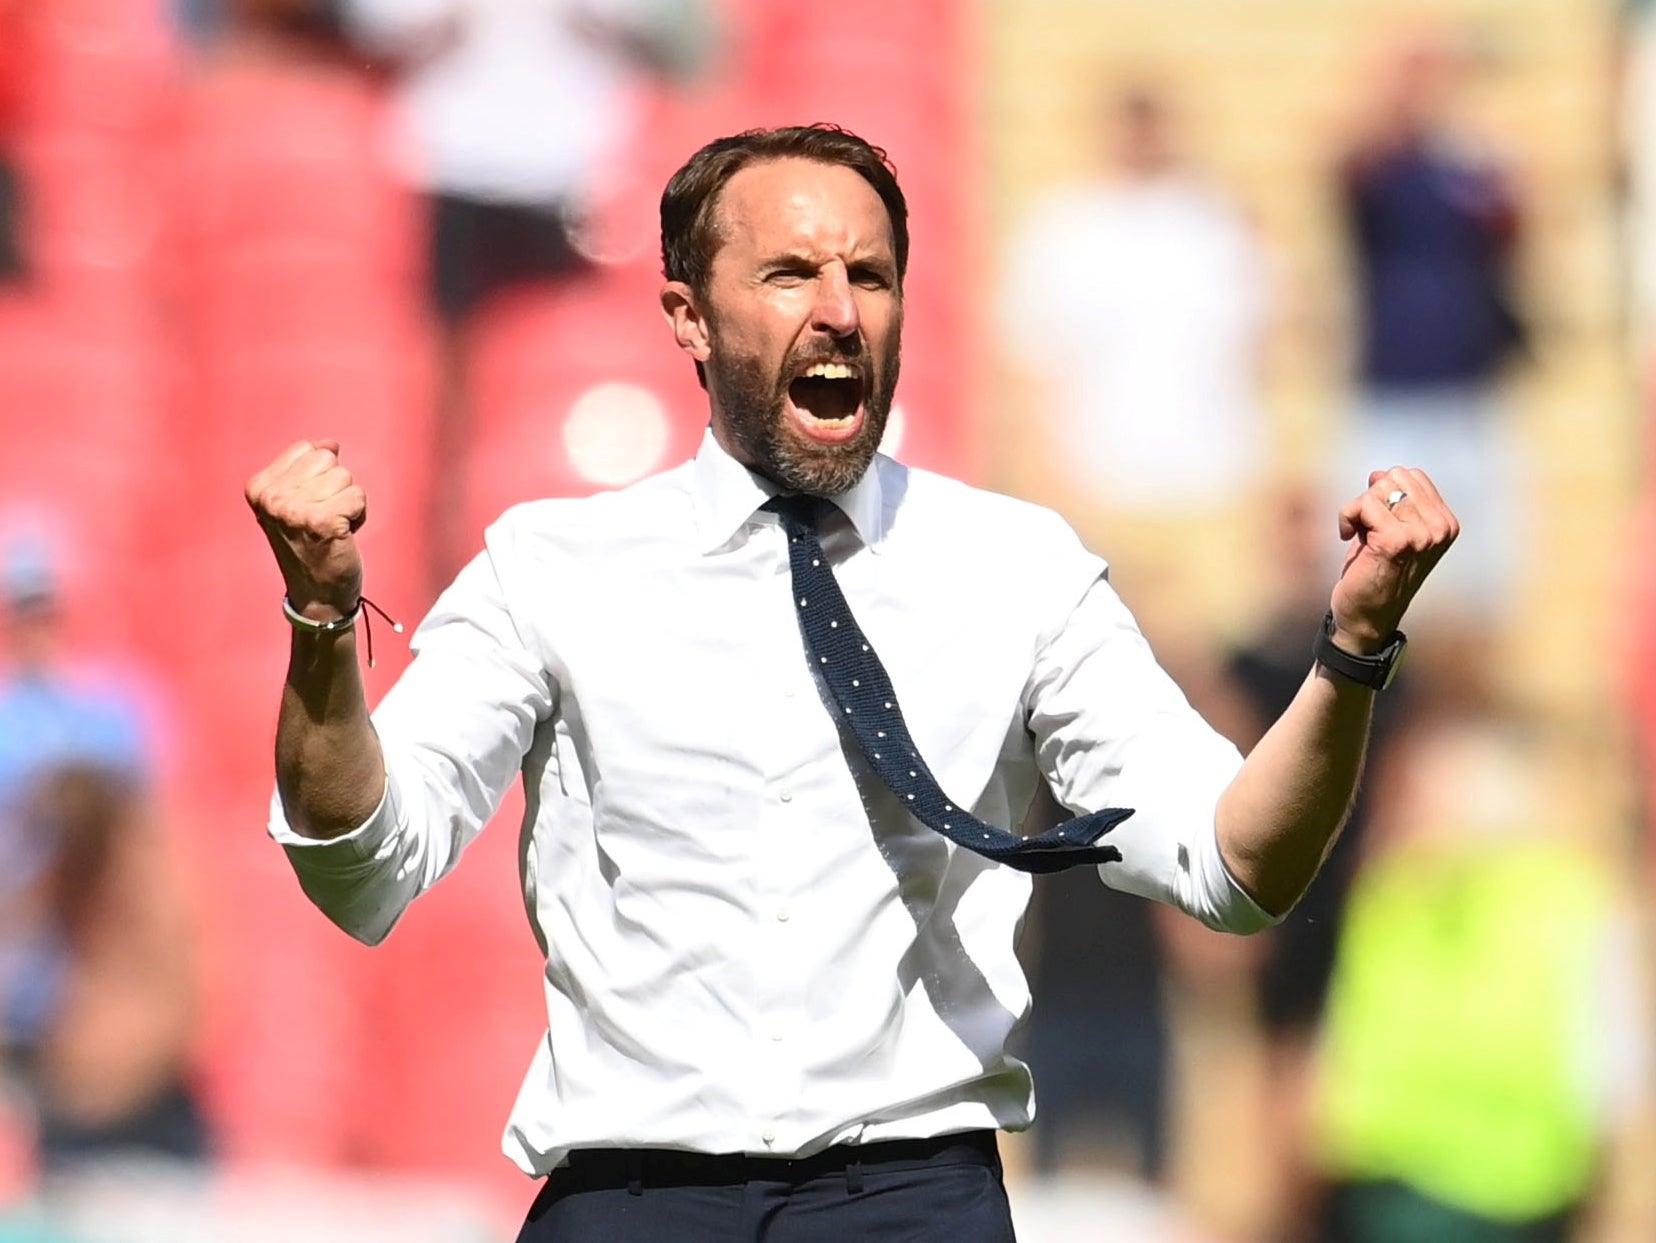 Home ground: England manager Gareth Southgate celebrates England’s wining goal against Croatia at Wembley